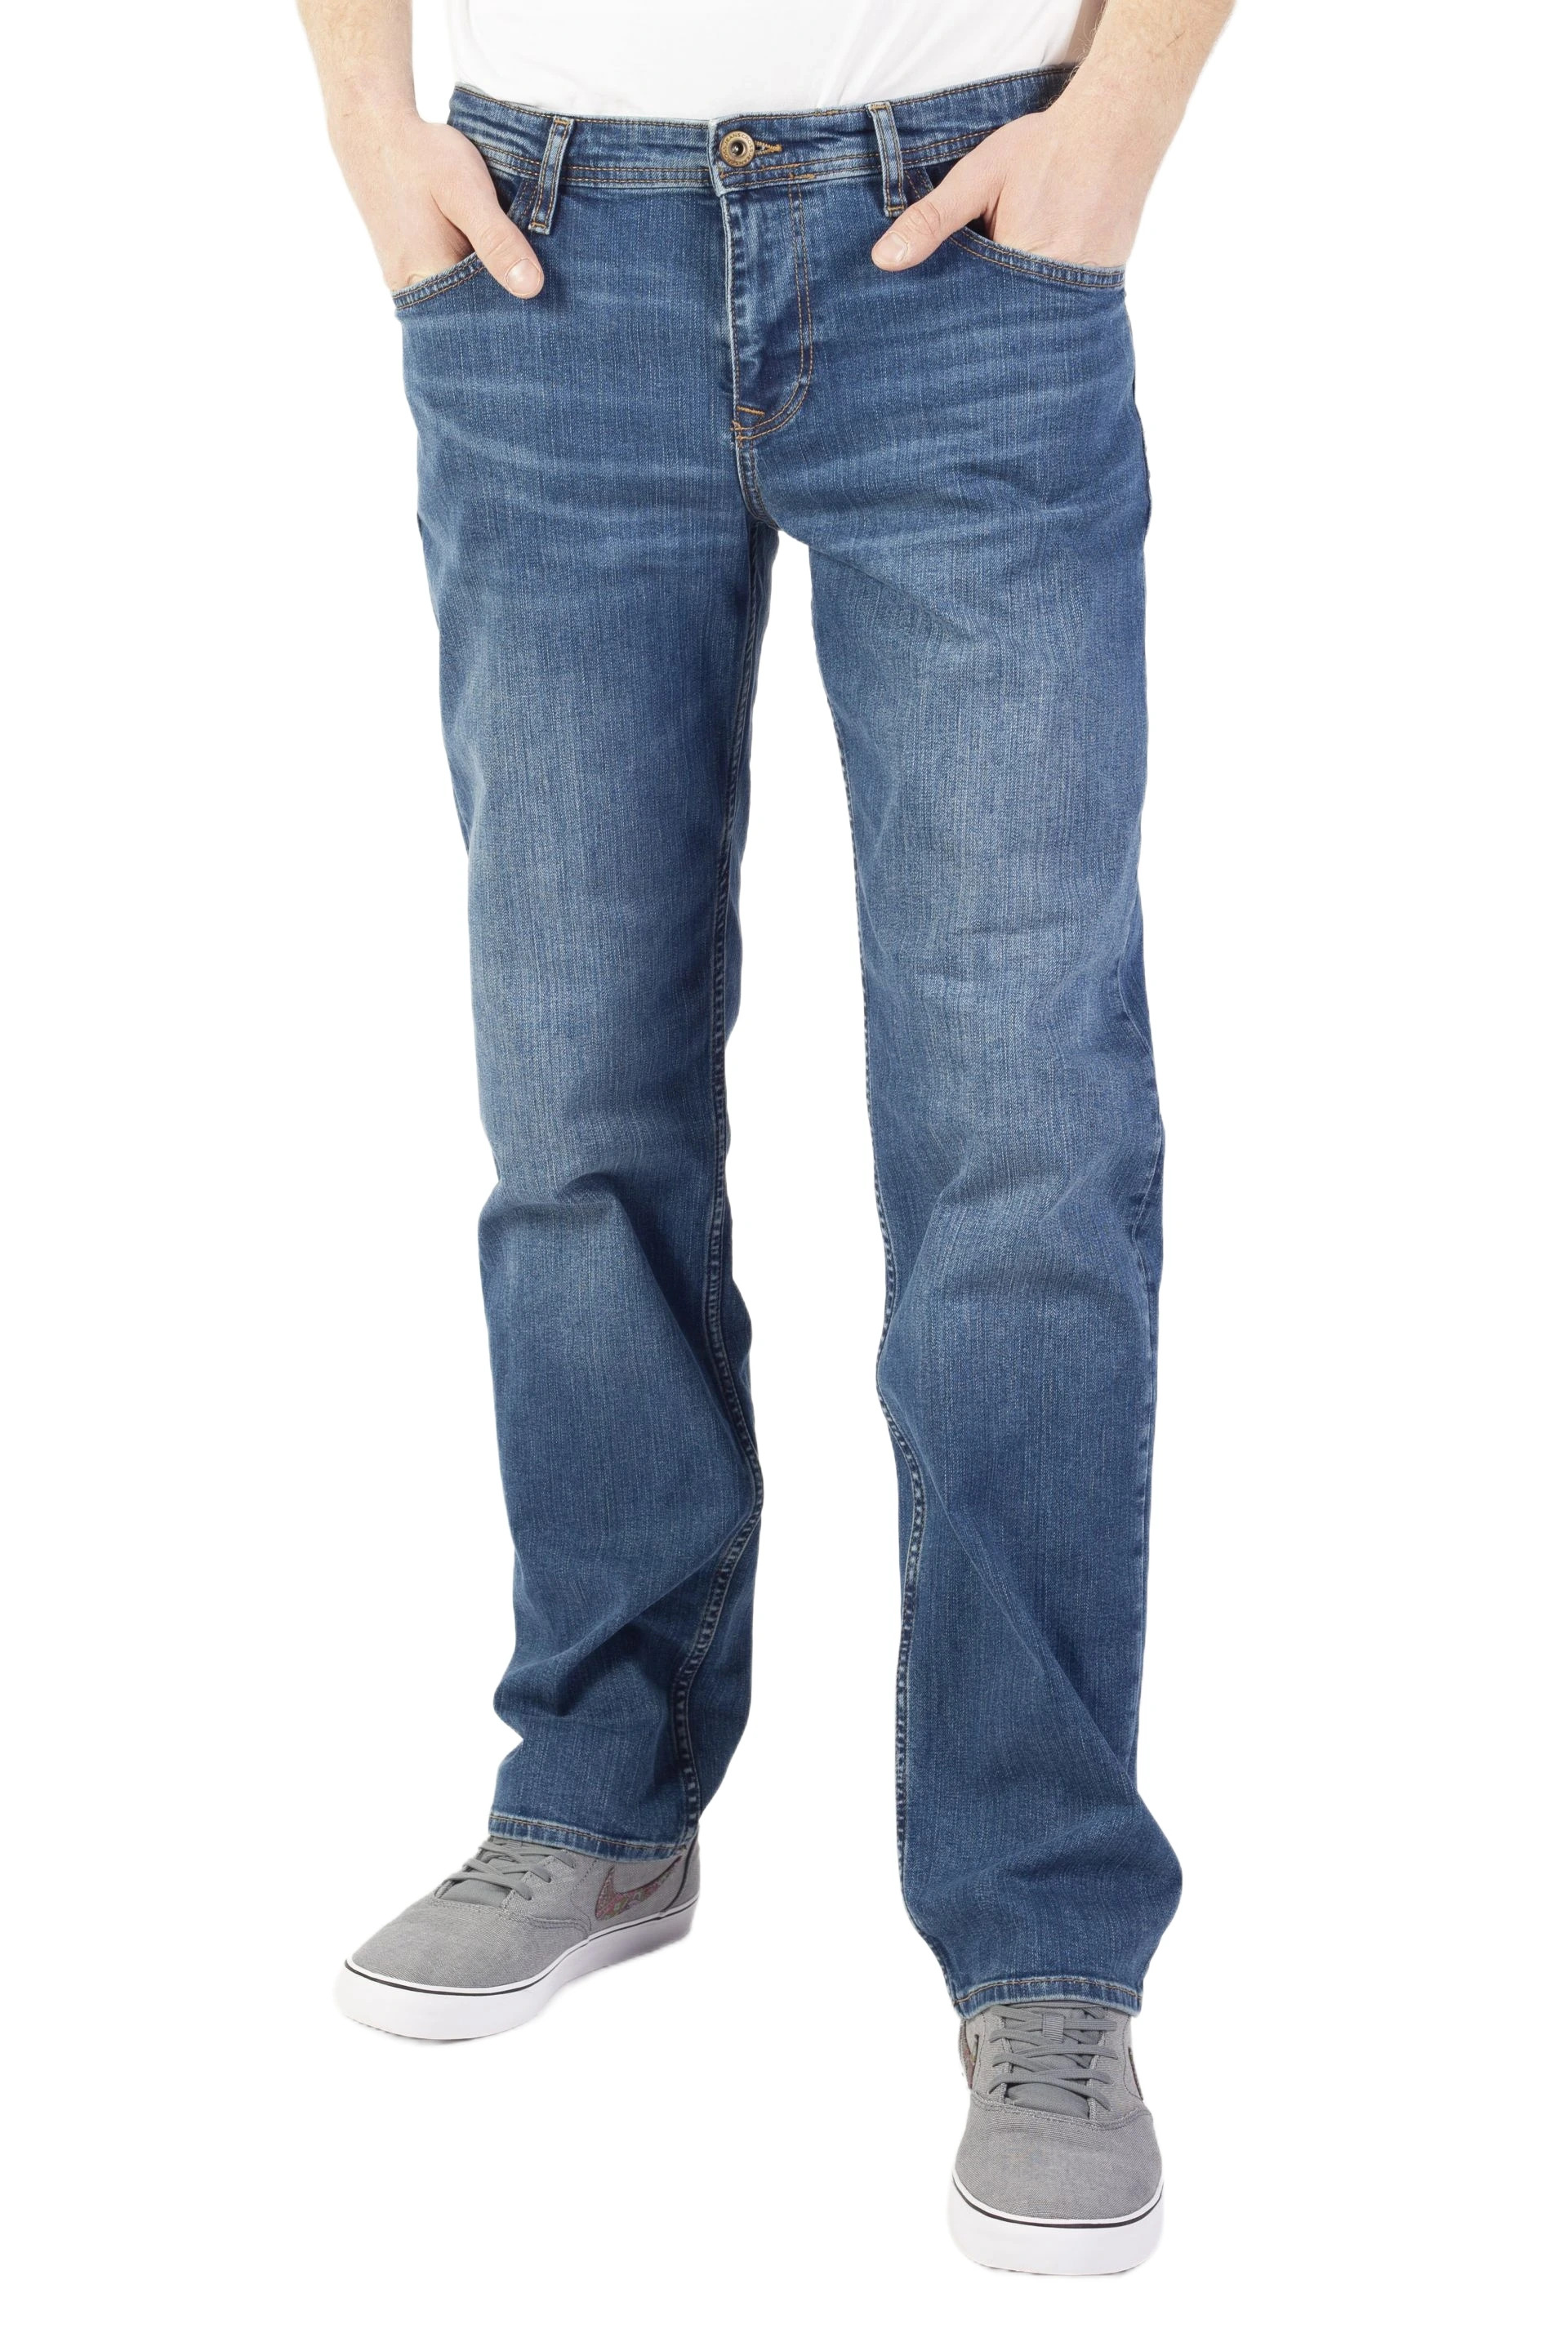 Jeans CROSS JEANS E161-137